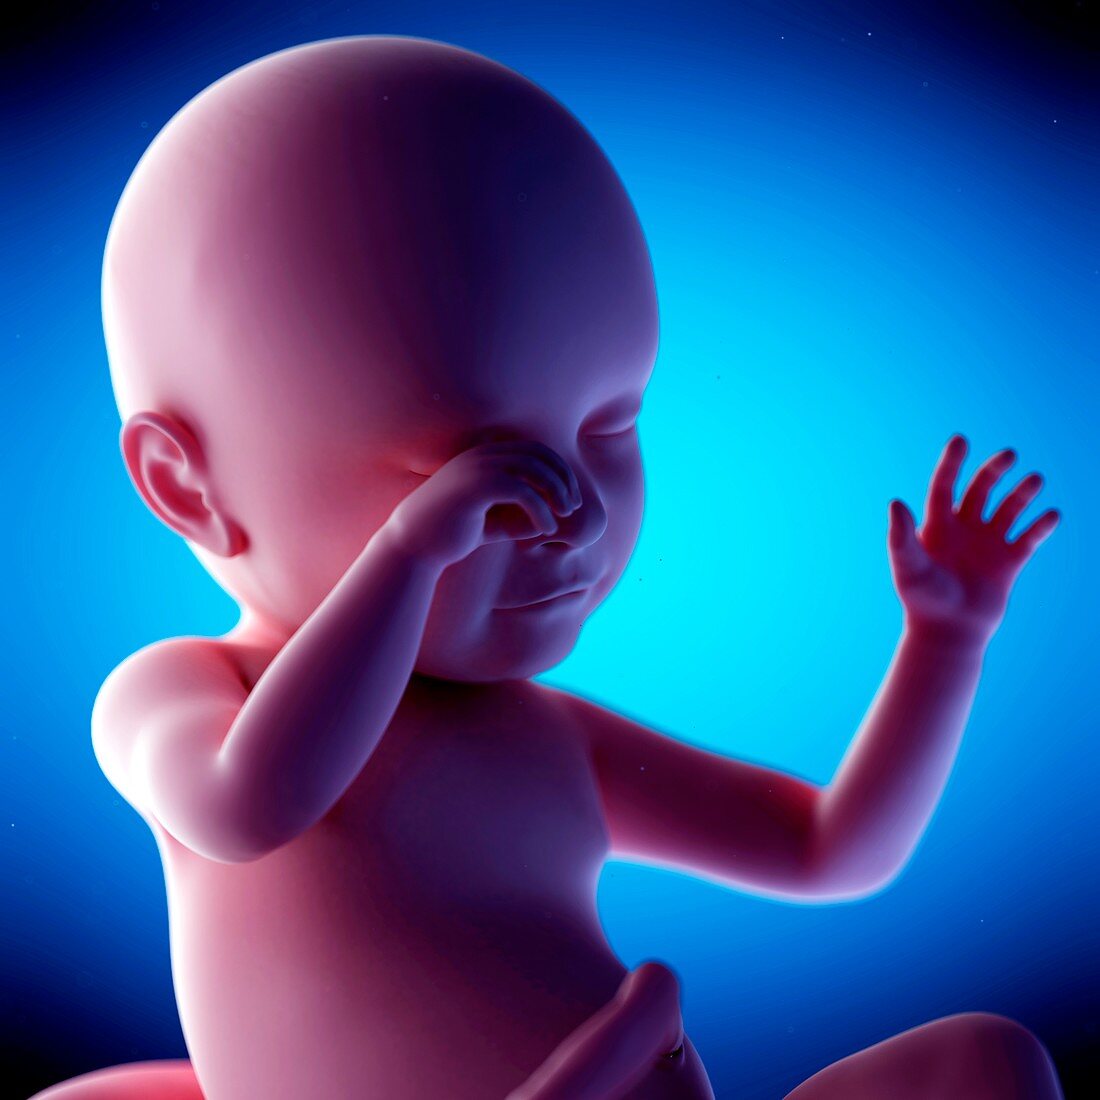 Human fetus at week 39 of gestation, illustration